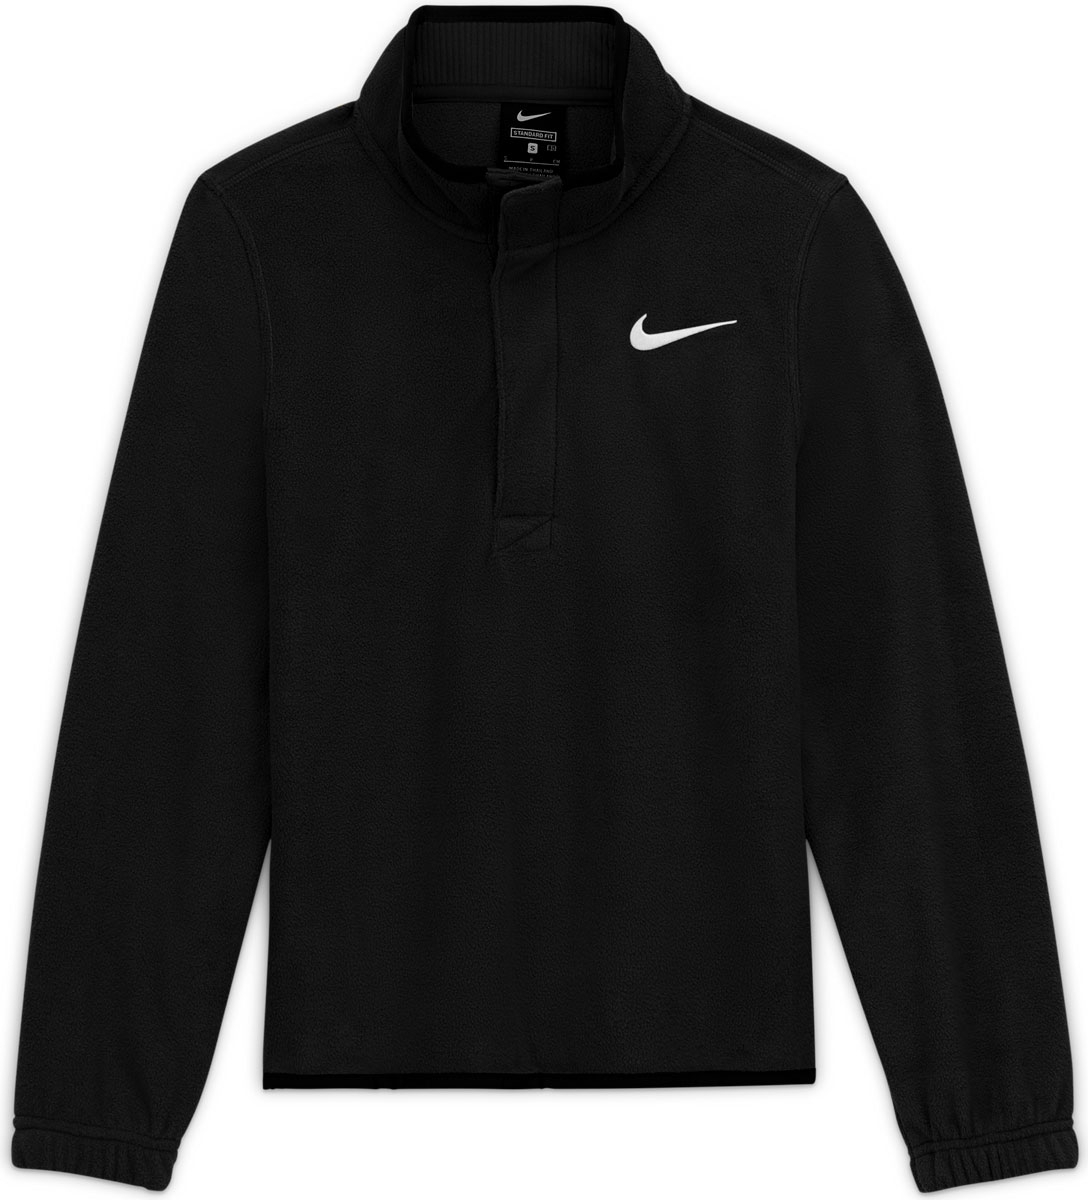 Nike Therma Victory Half-Zip Junior Golf Pullovers